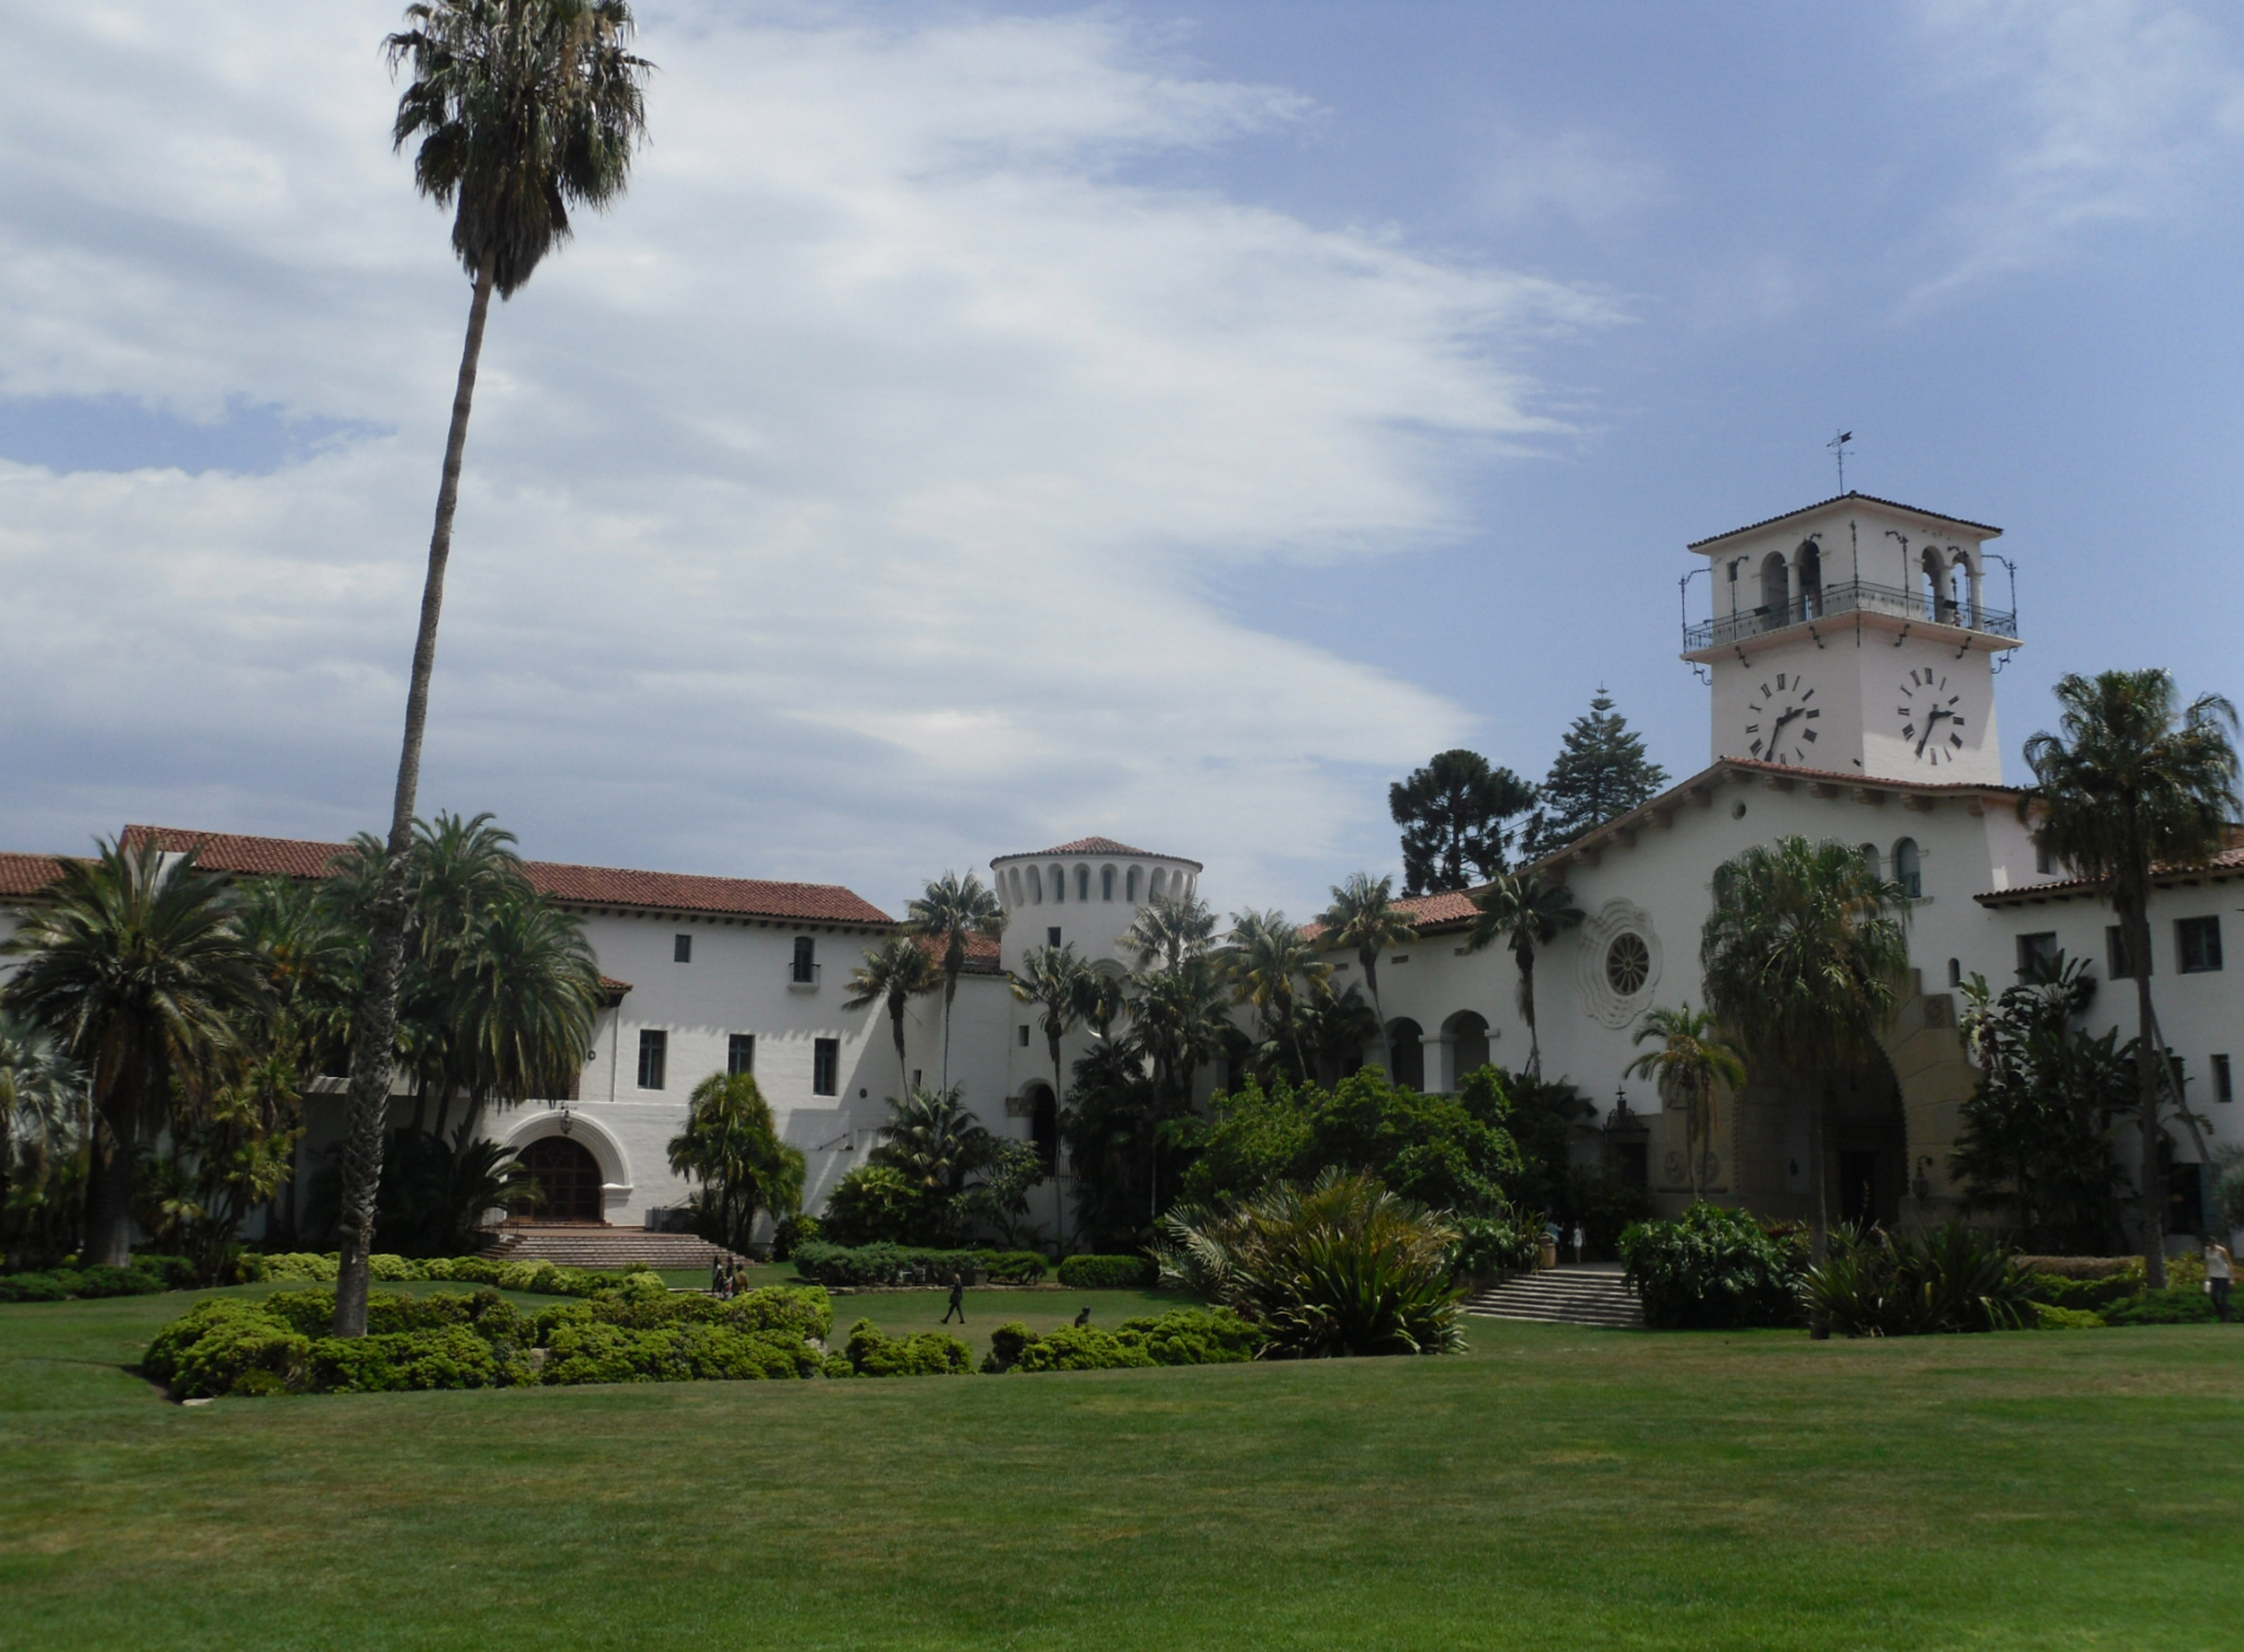 Visit the Santa Barbara Courthouse. Photo by Aimee Robbins.